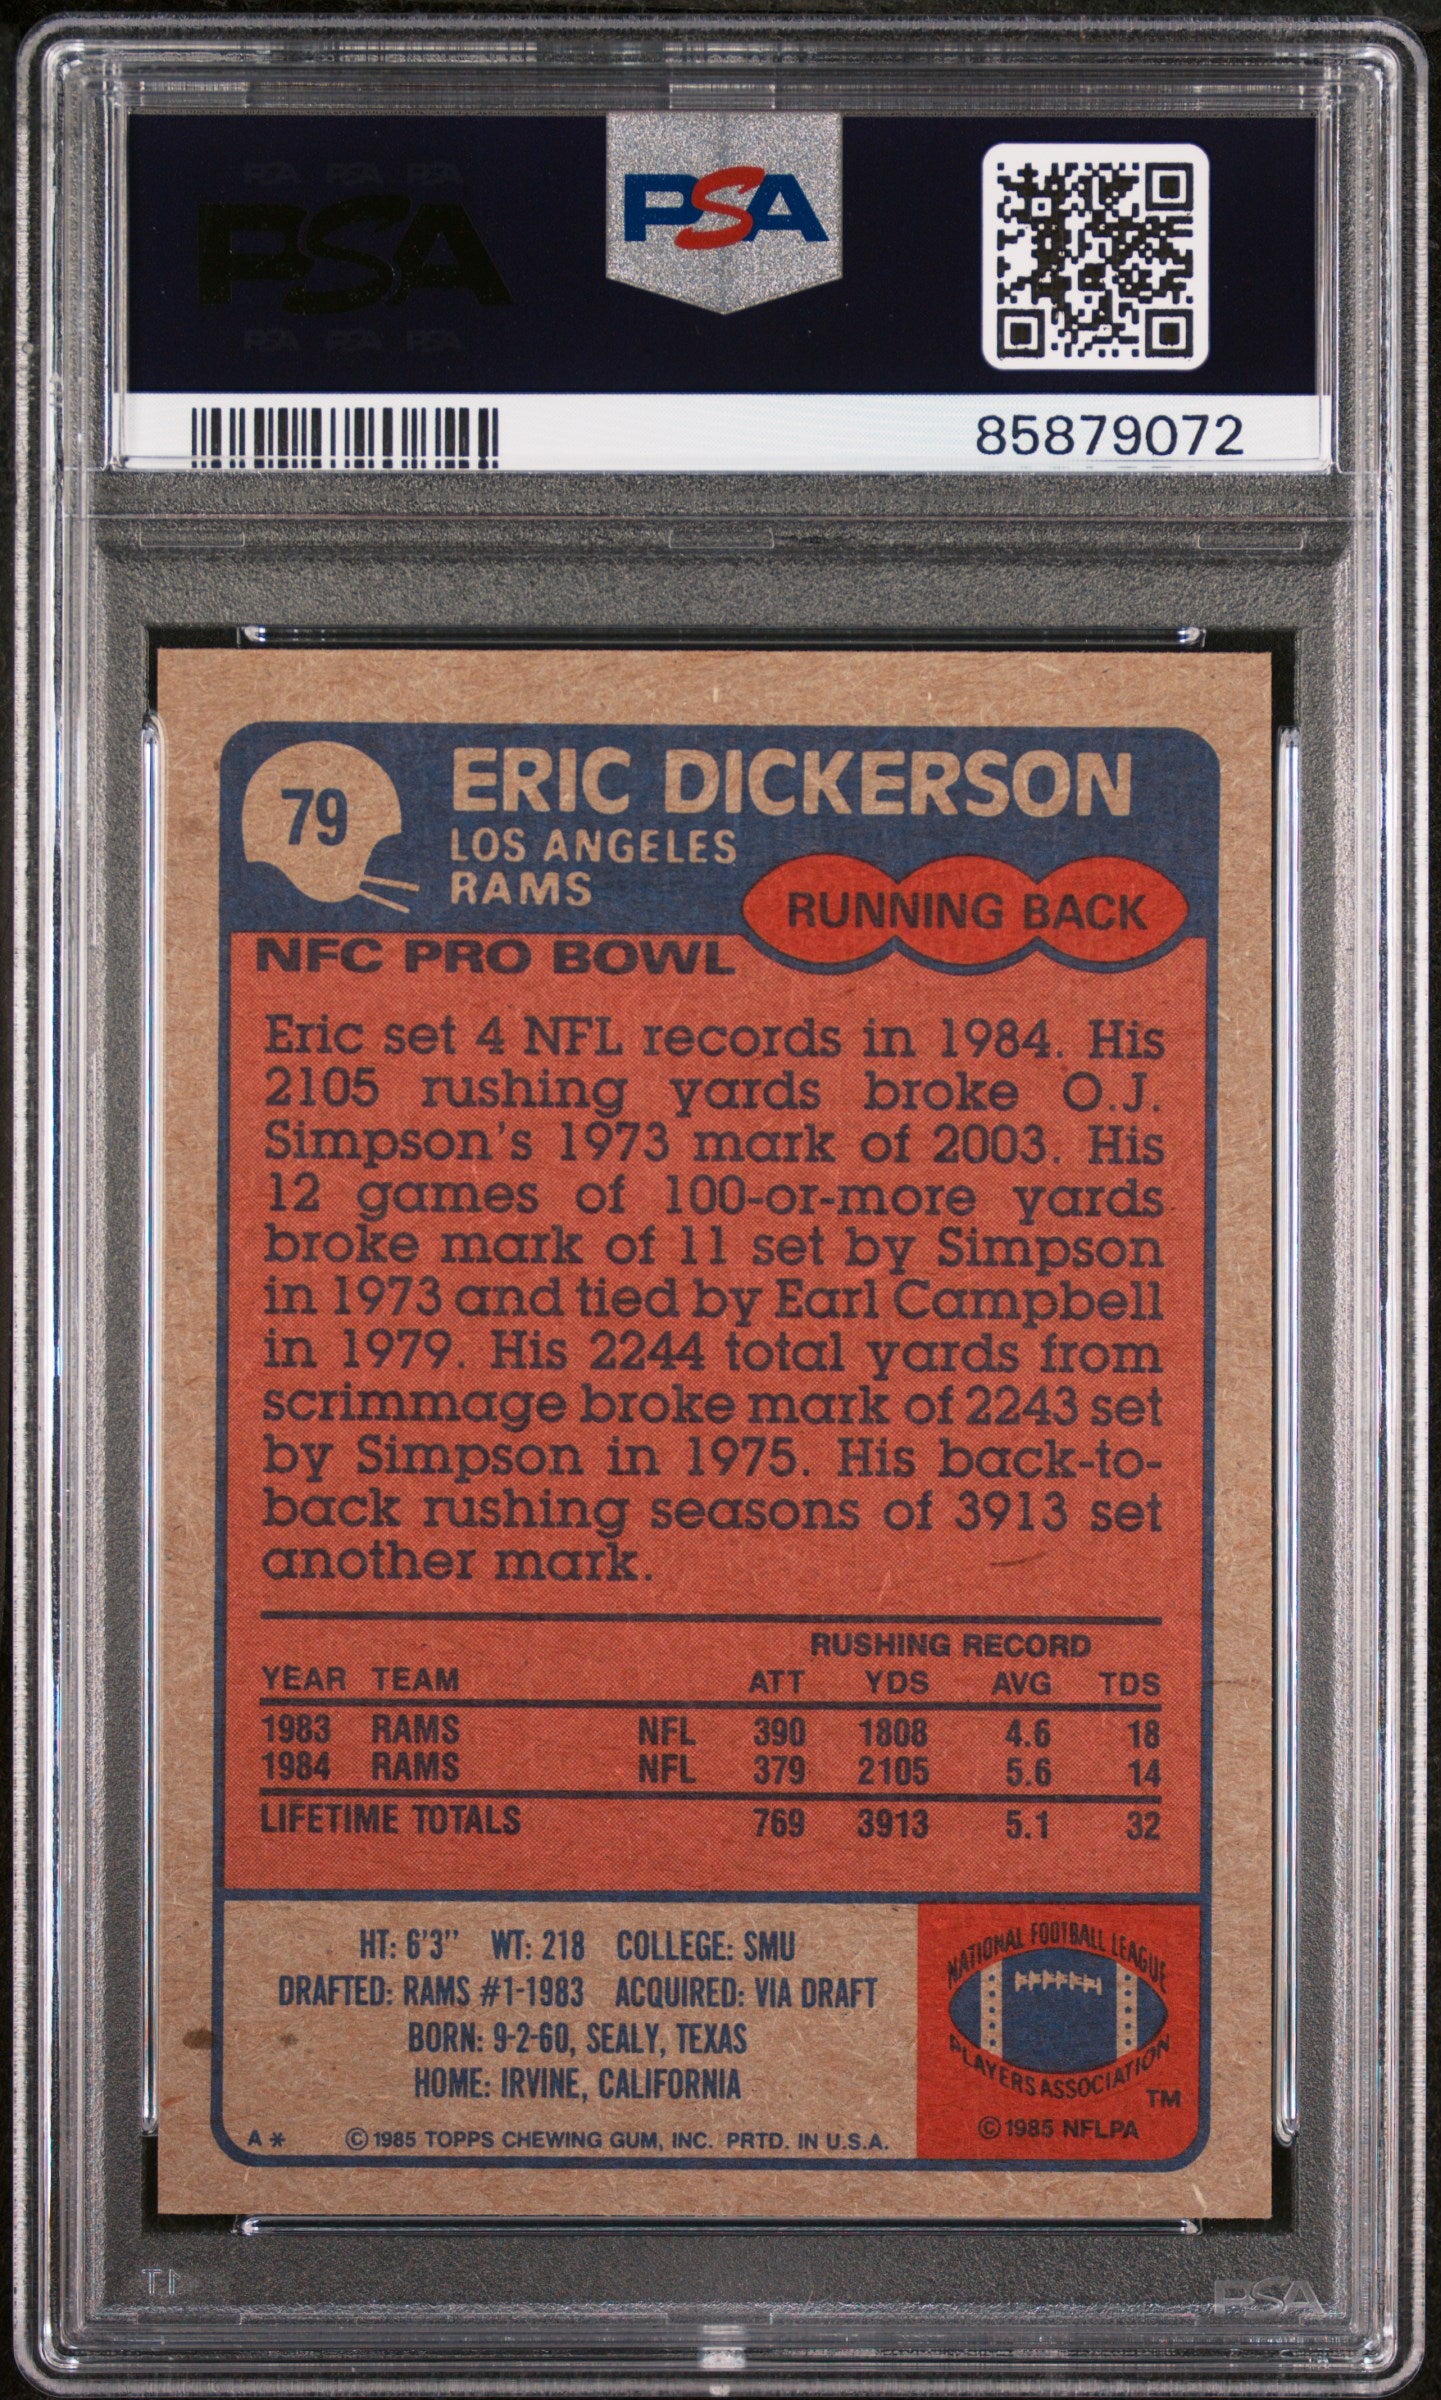 1985 Topps Eric Dickerson #79 PSA 7